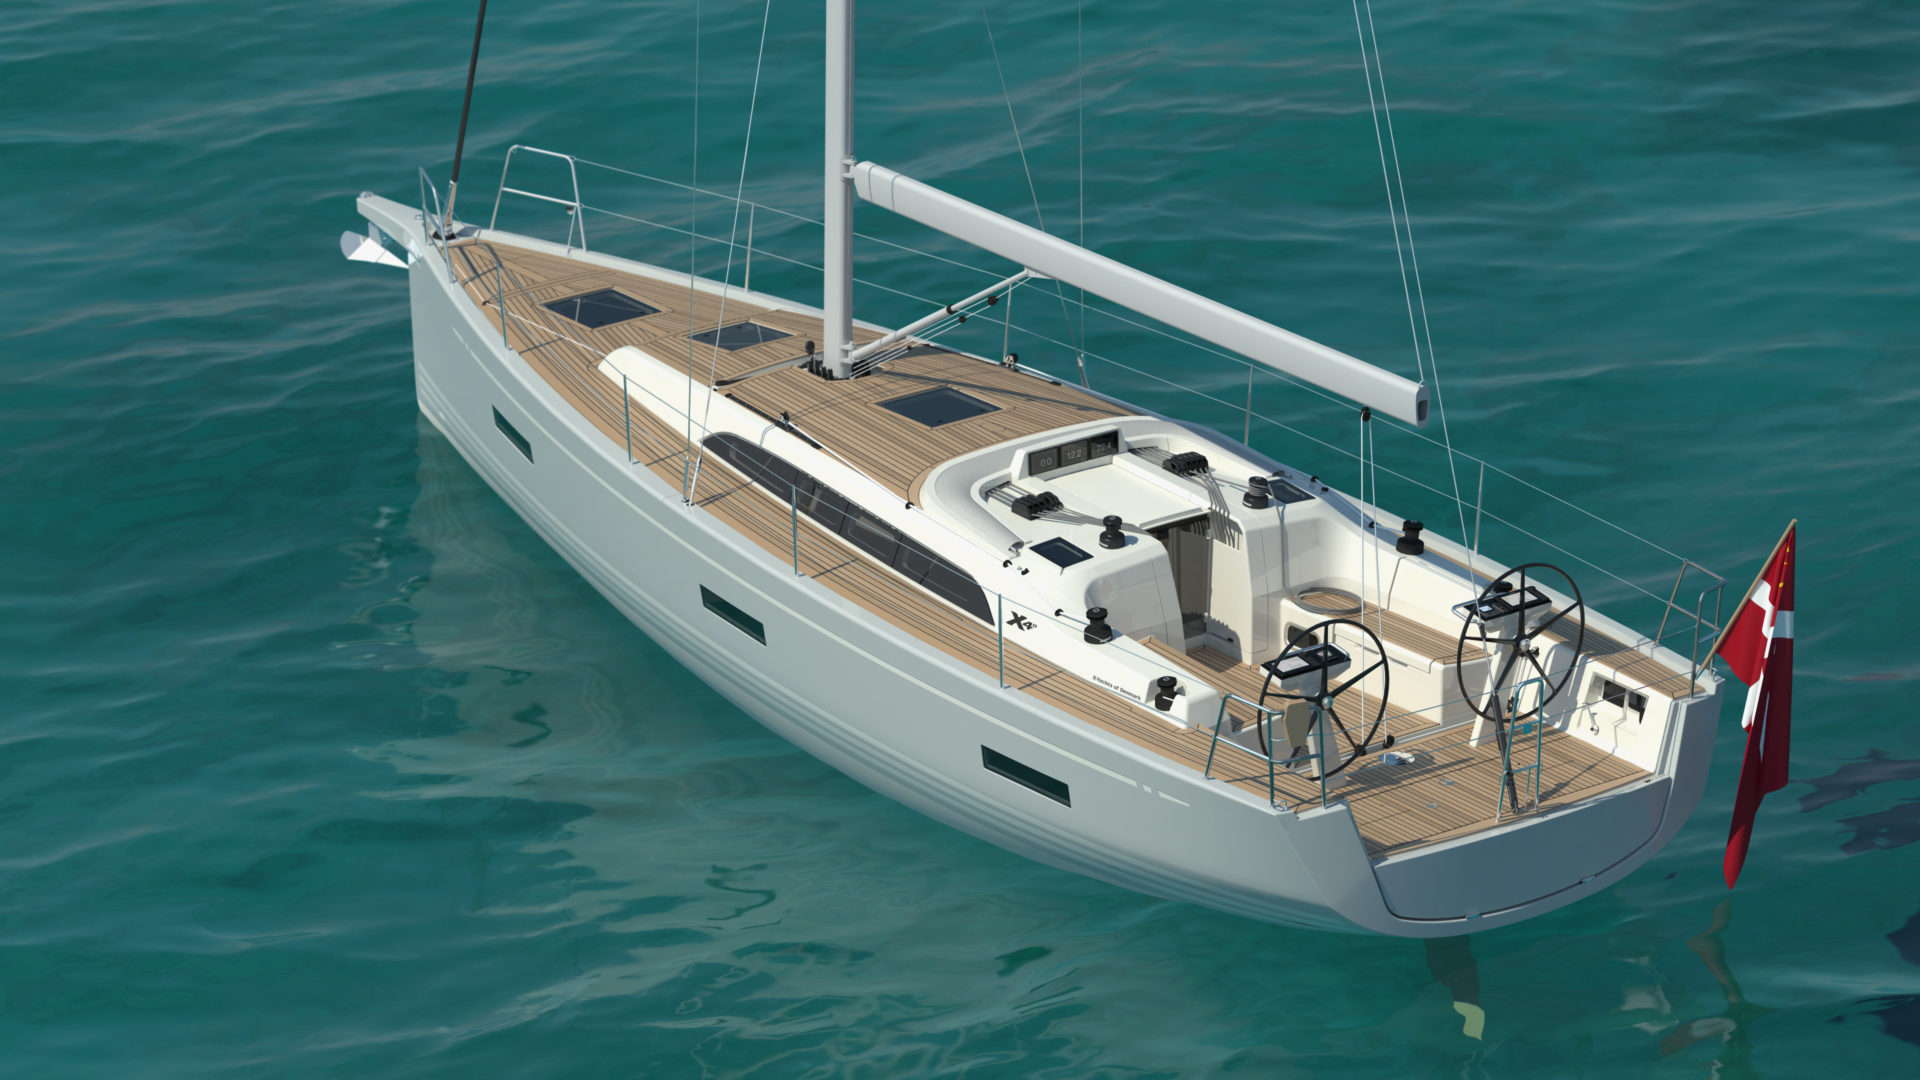 x40 yacht price